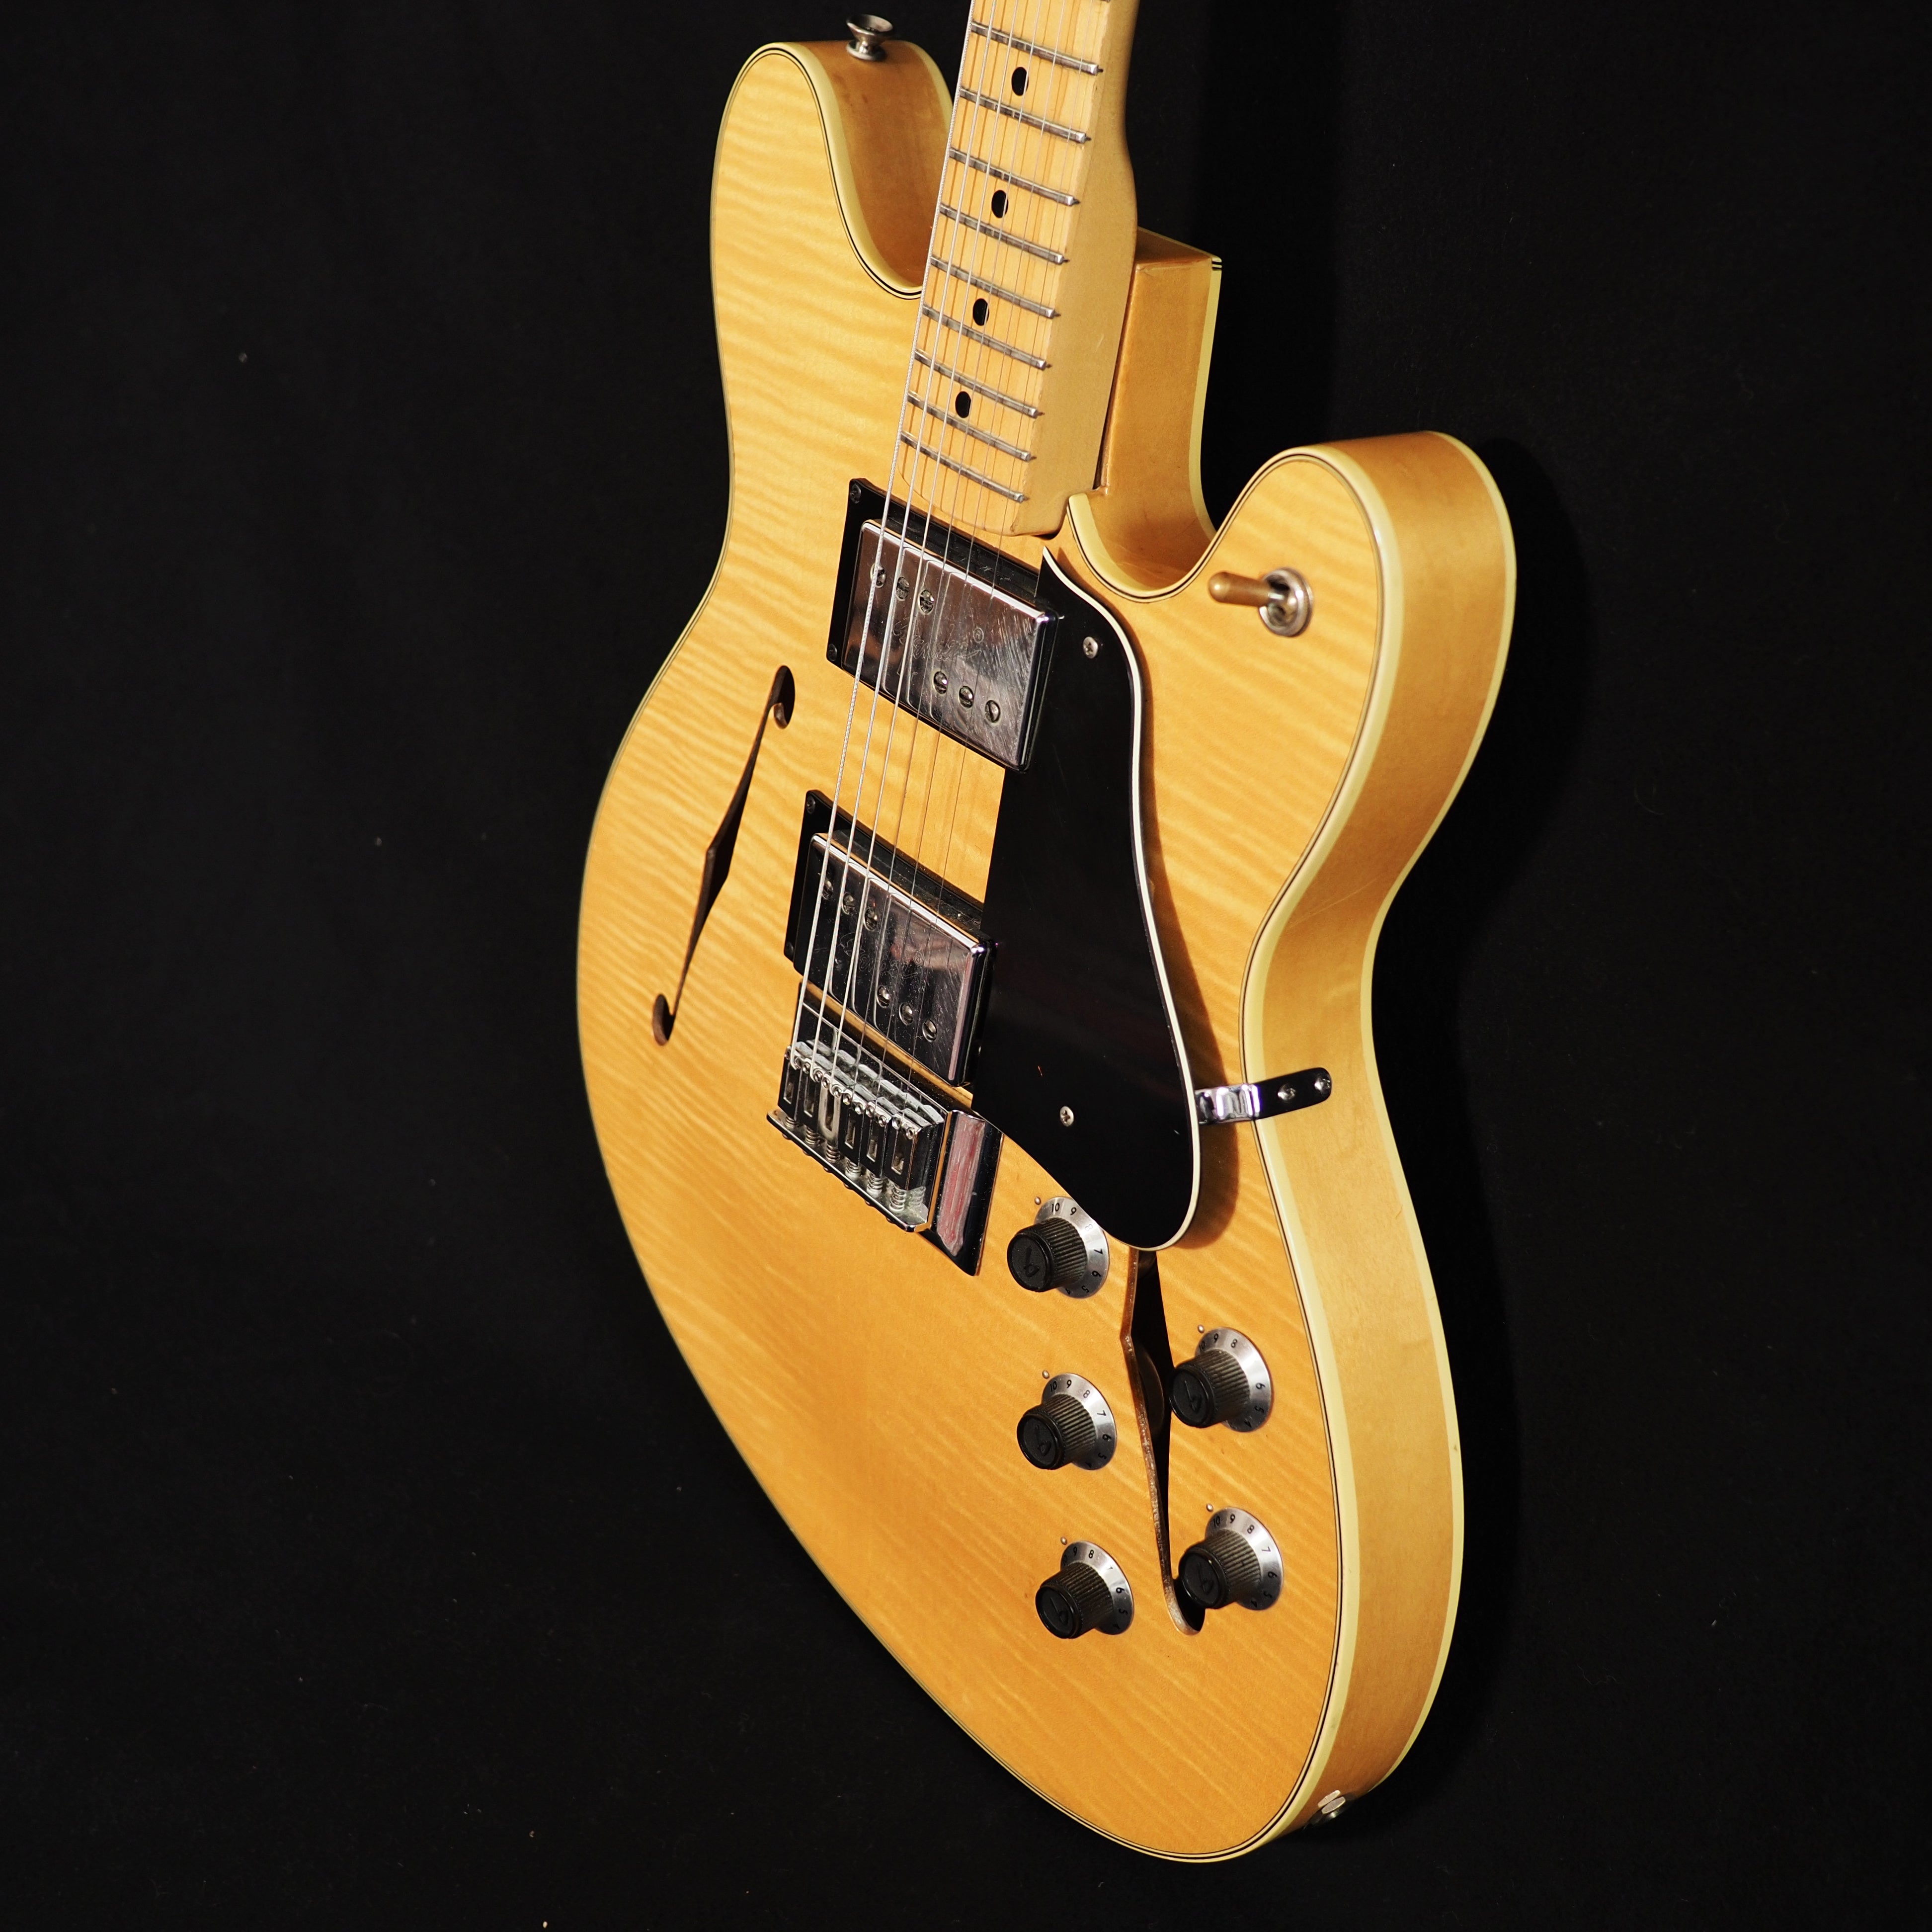 Orbita escritorio Pickering Fender Starcaster from 1977 – wurst.guitars